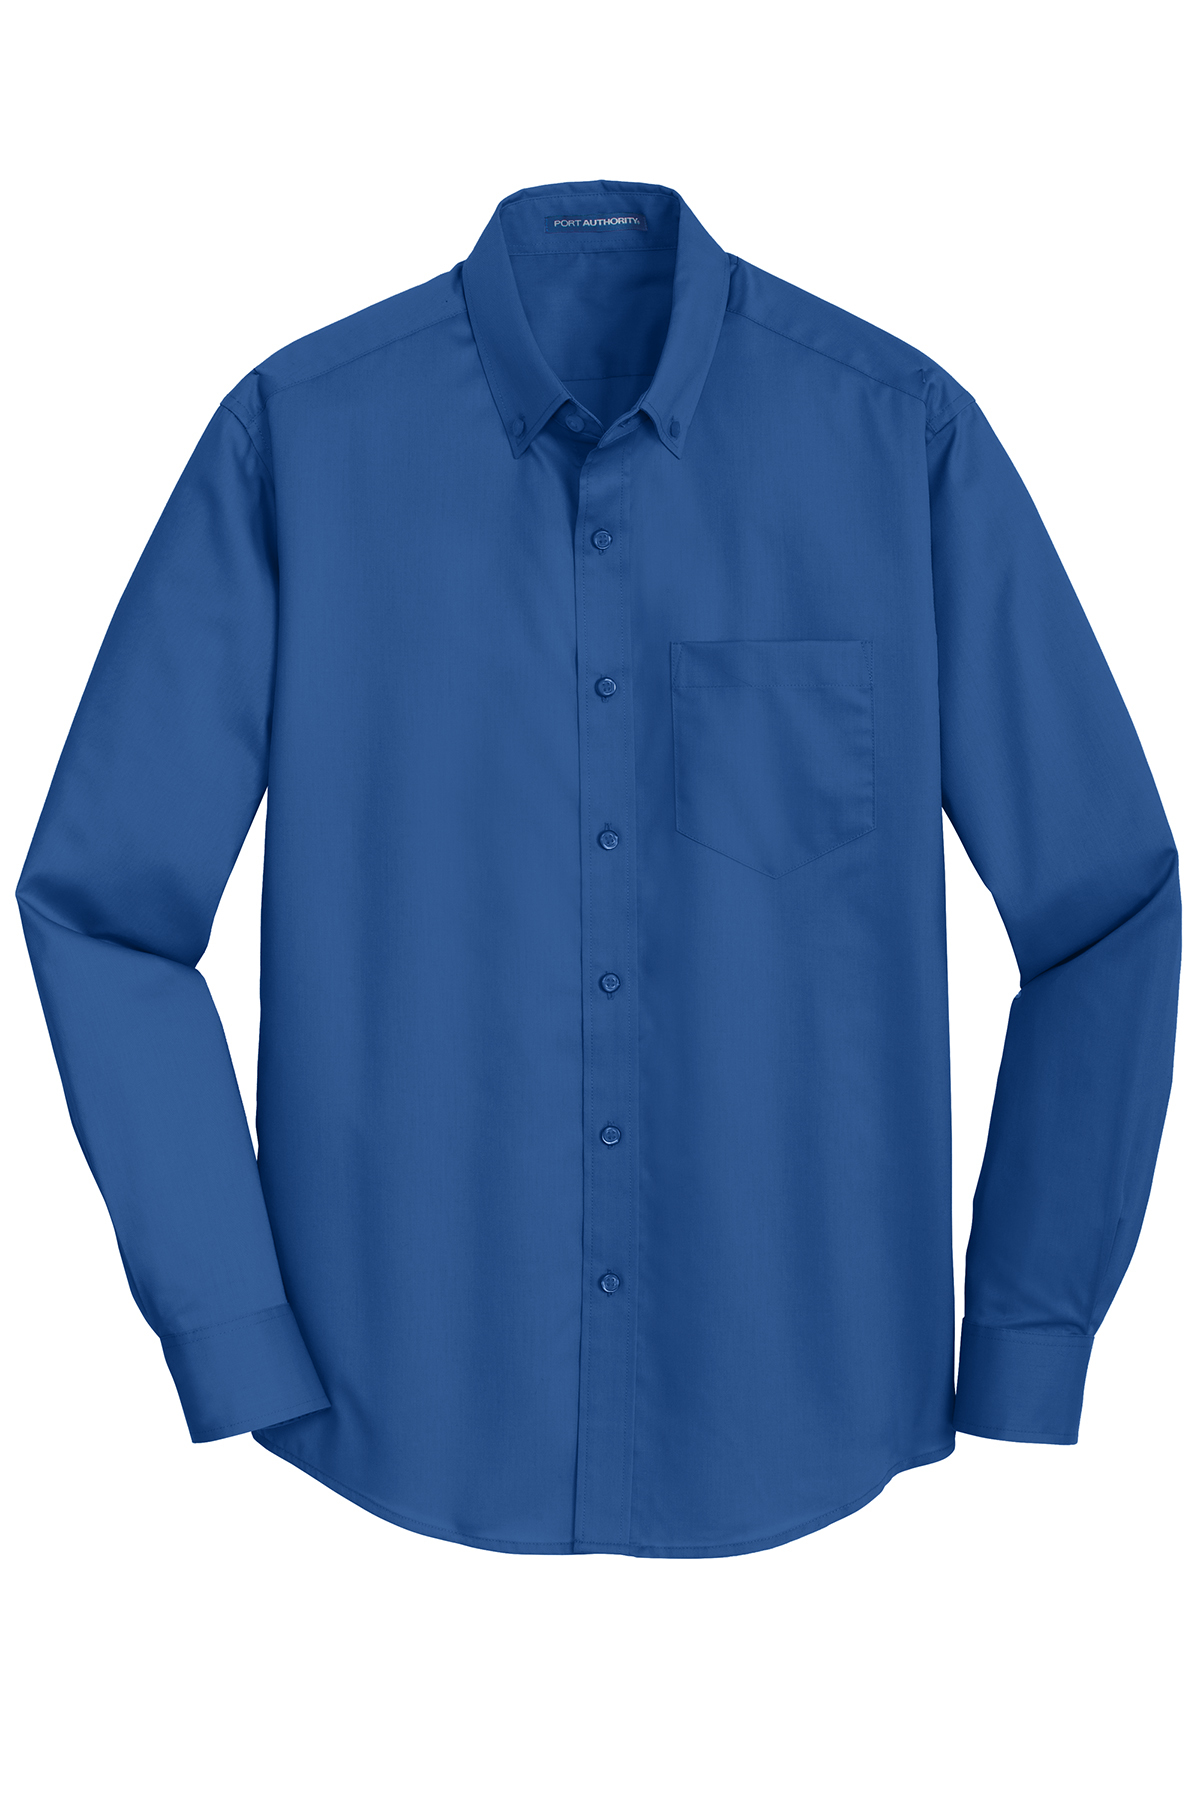 Port Authority SuperPro Twill Shirt S663 